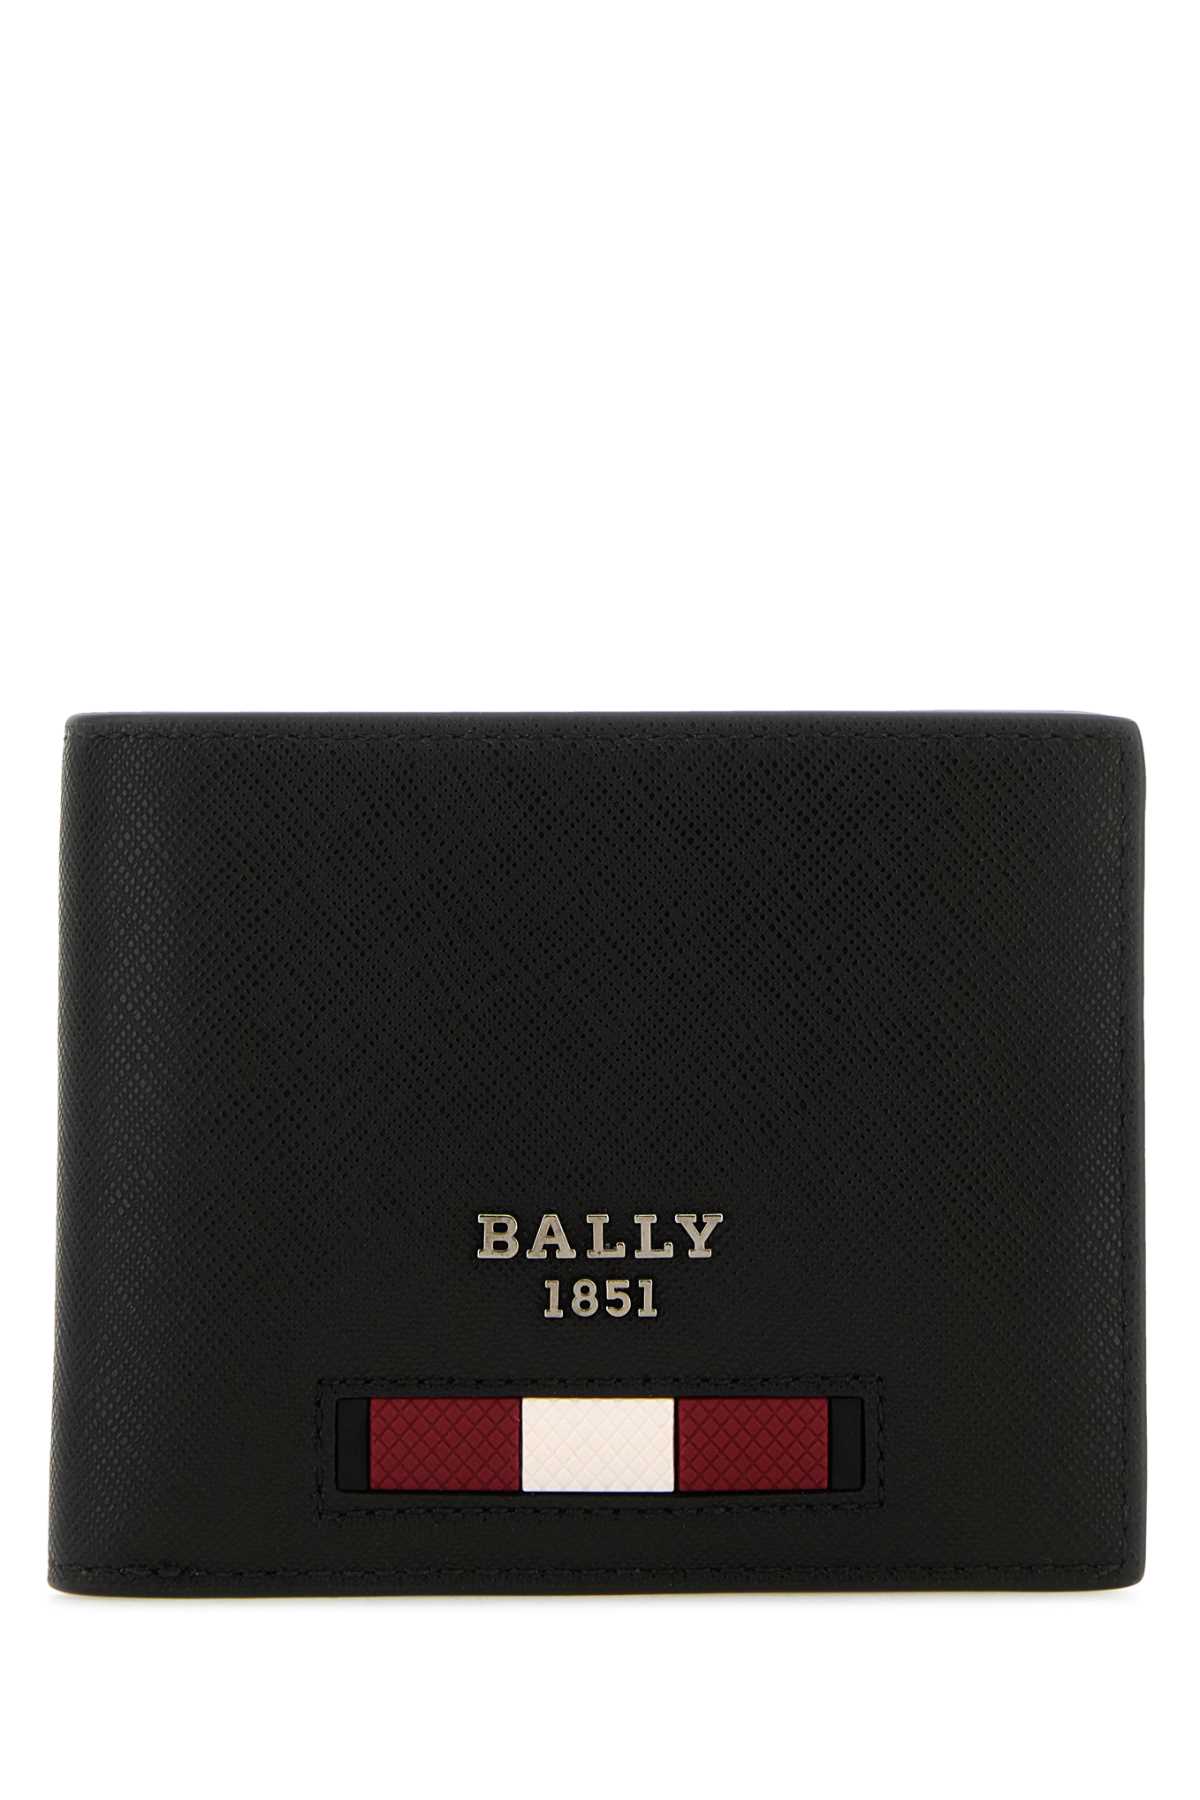 Bally Black Leather Bevye Wallet